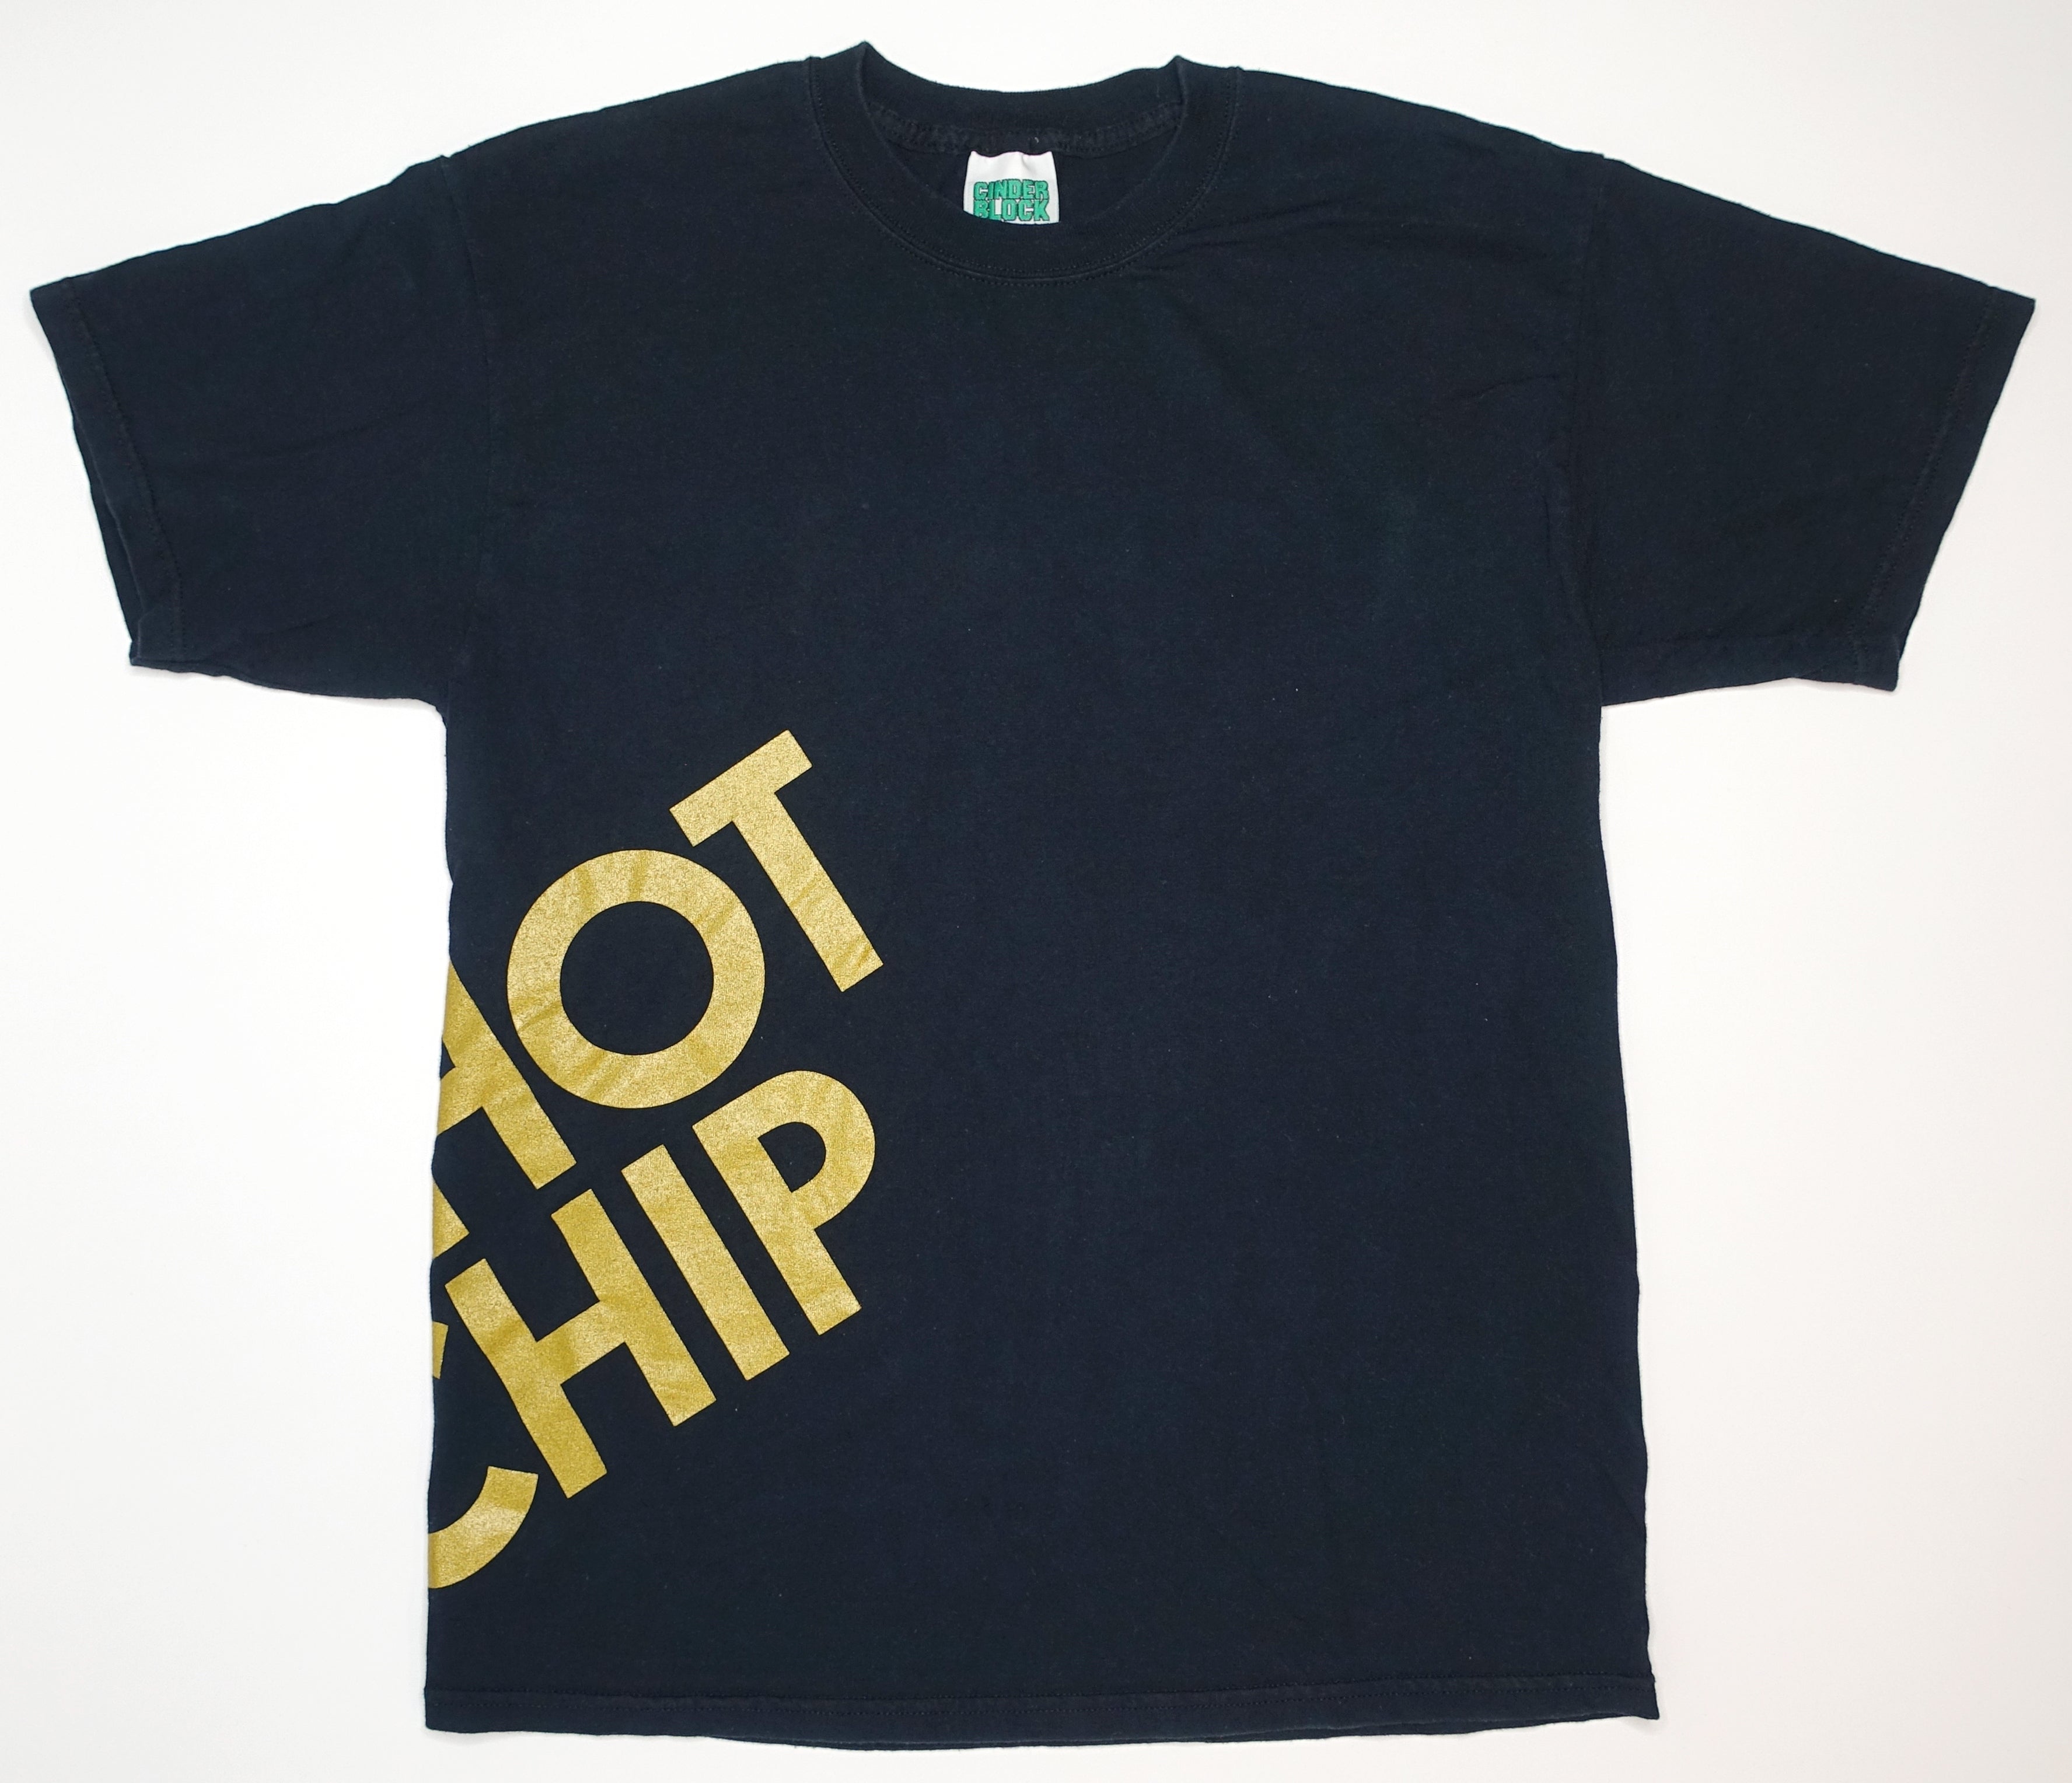 Hot Chip - Side Logo Tour Shirt Size Large